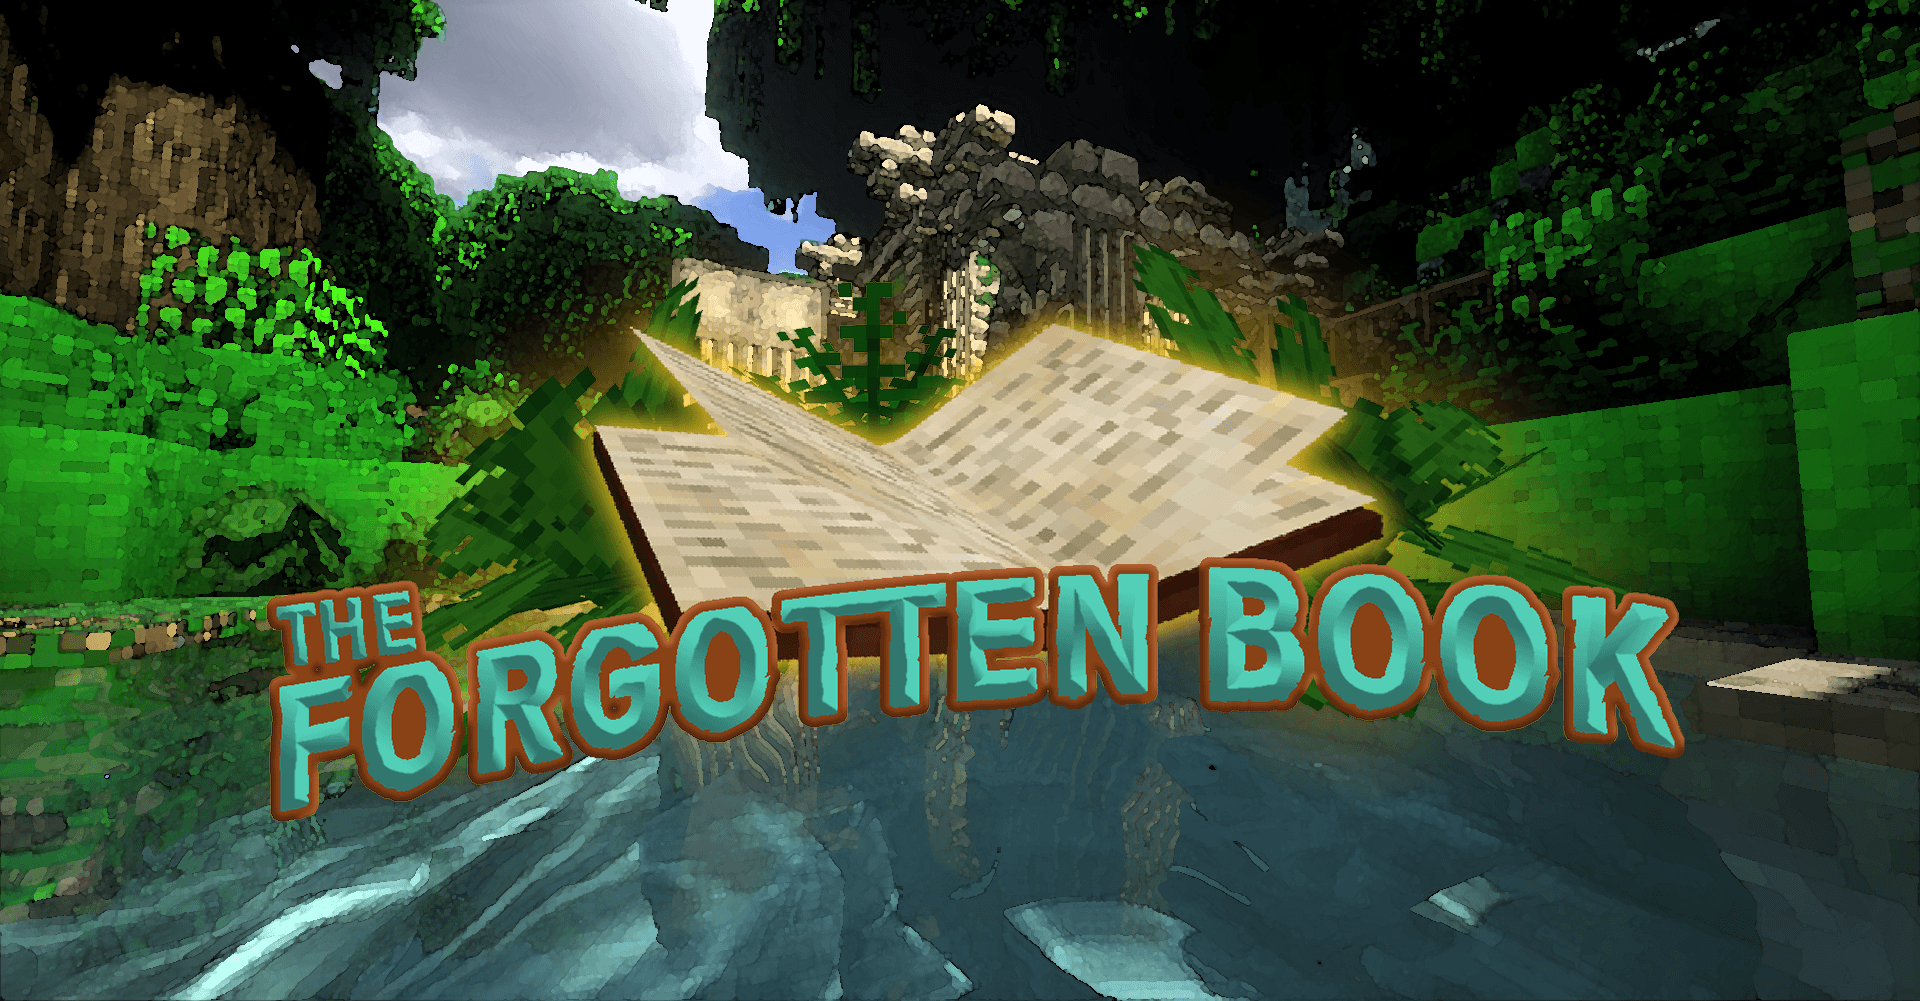 Forgotten Memories - Horror Adventure Map 1.7.5 Minecraft Map